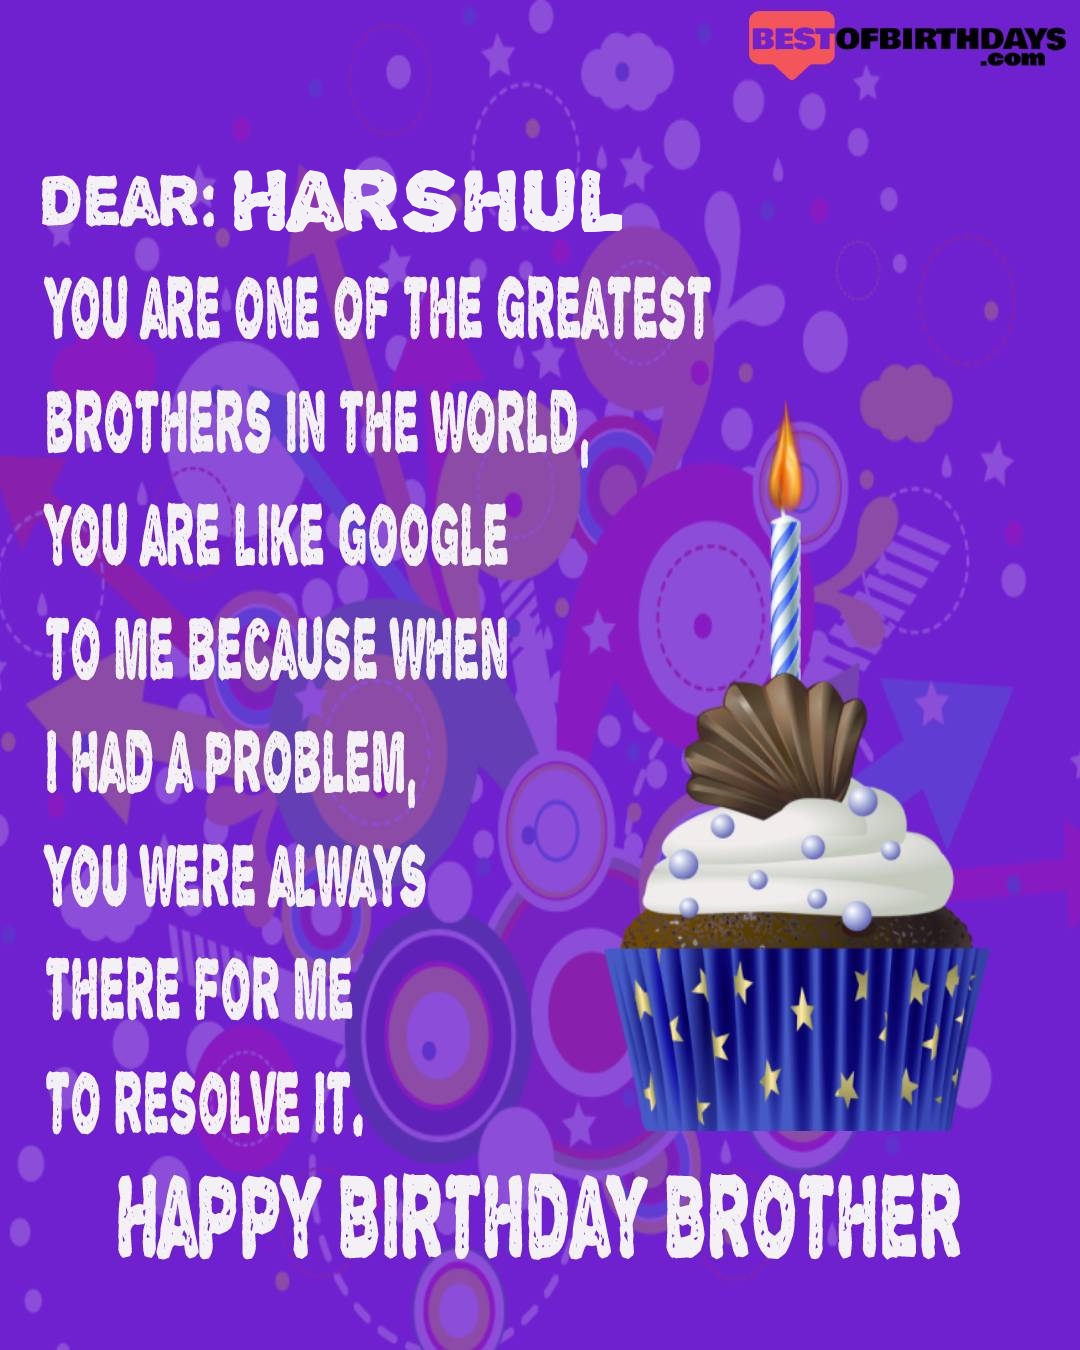 Happy birthday harshul bhai brother bro